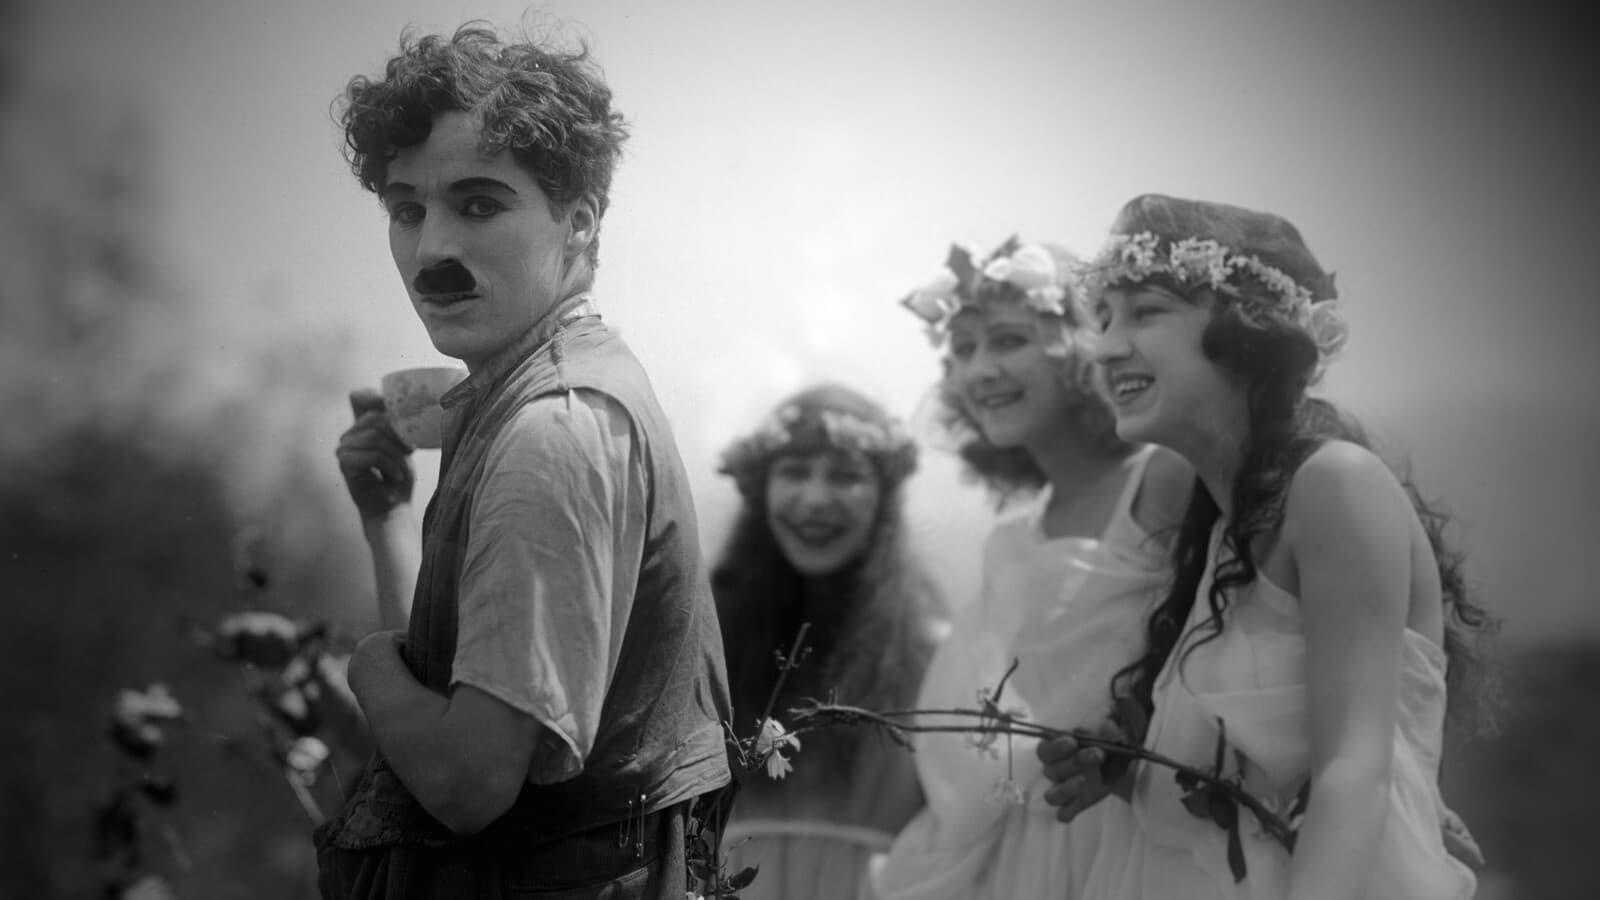 Charlie Chaplin, The Genius of Liberty backdrop